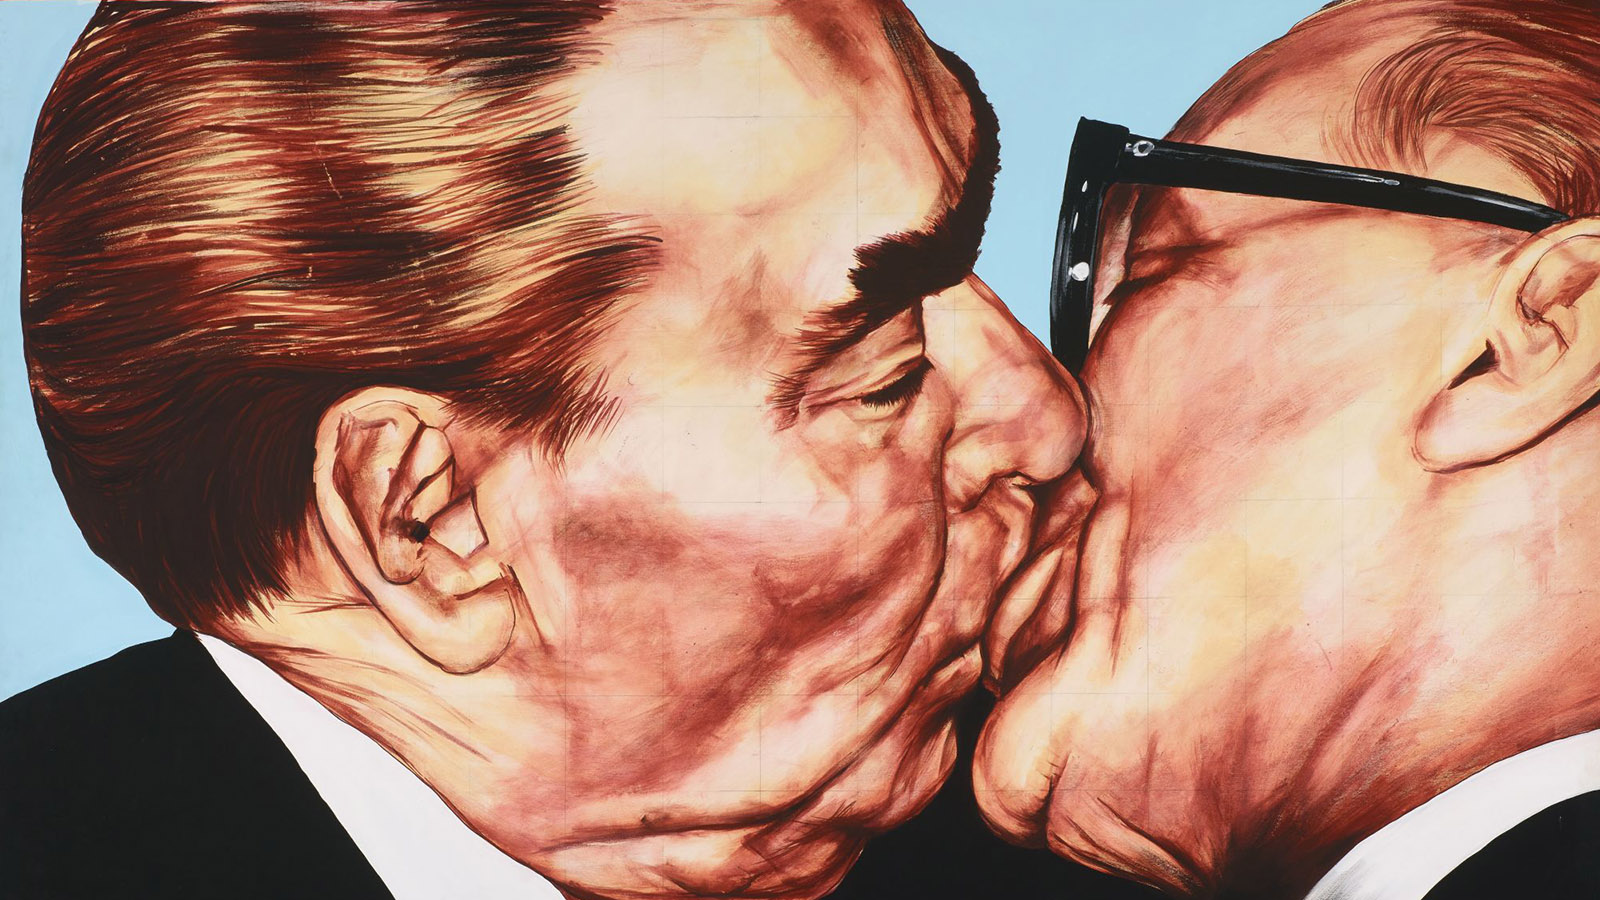 Враги целуются жадно 2. Брежнев и Хонеккер поцелуй. Поцелуй Брежнева с Хонеккером. Брежнев Хонеккер Братский поцелуй.